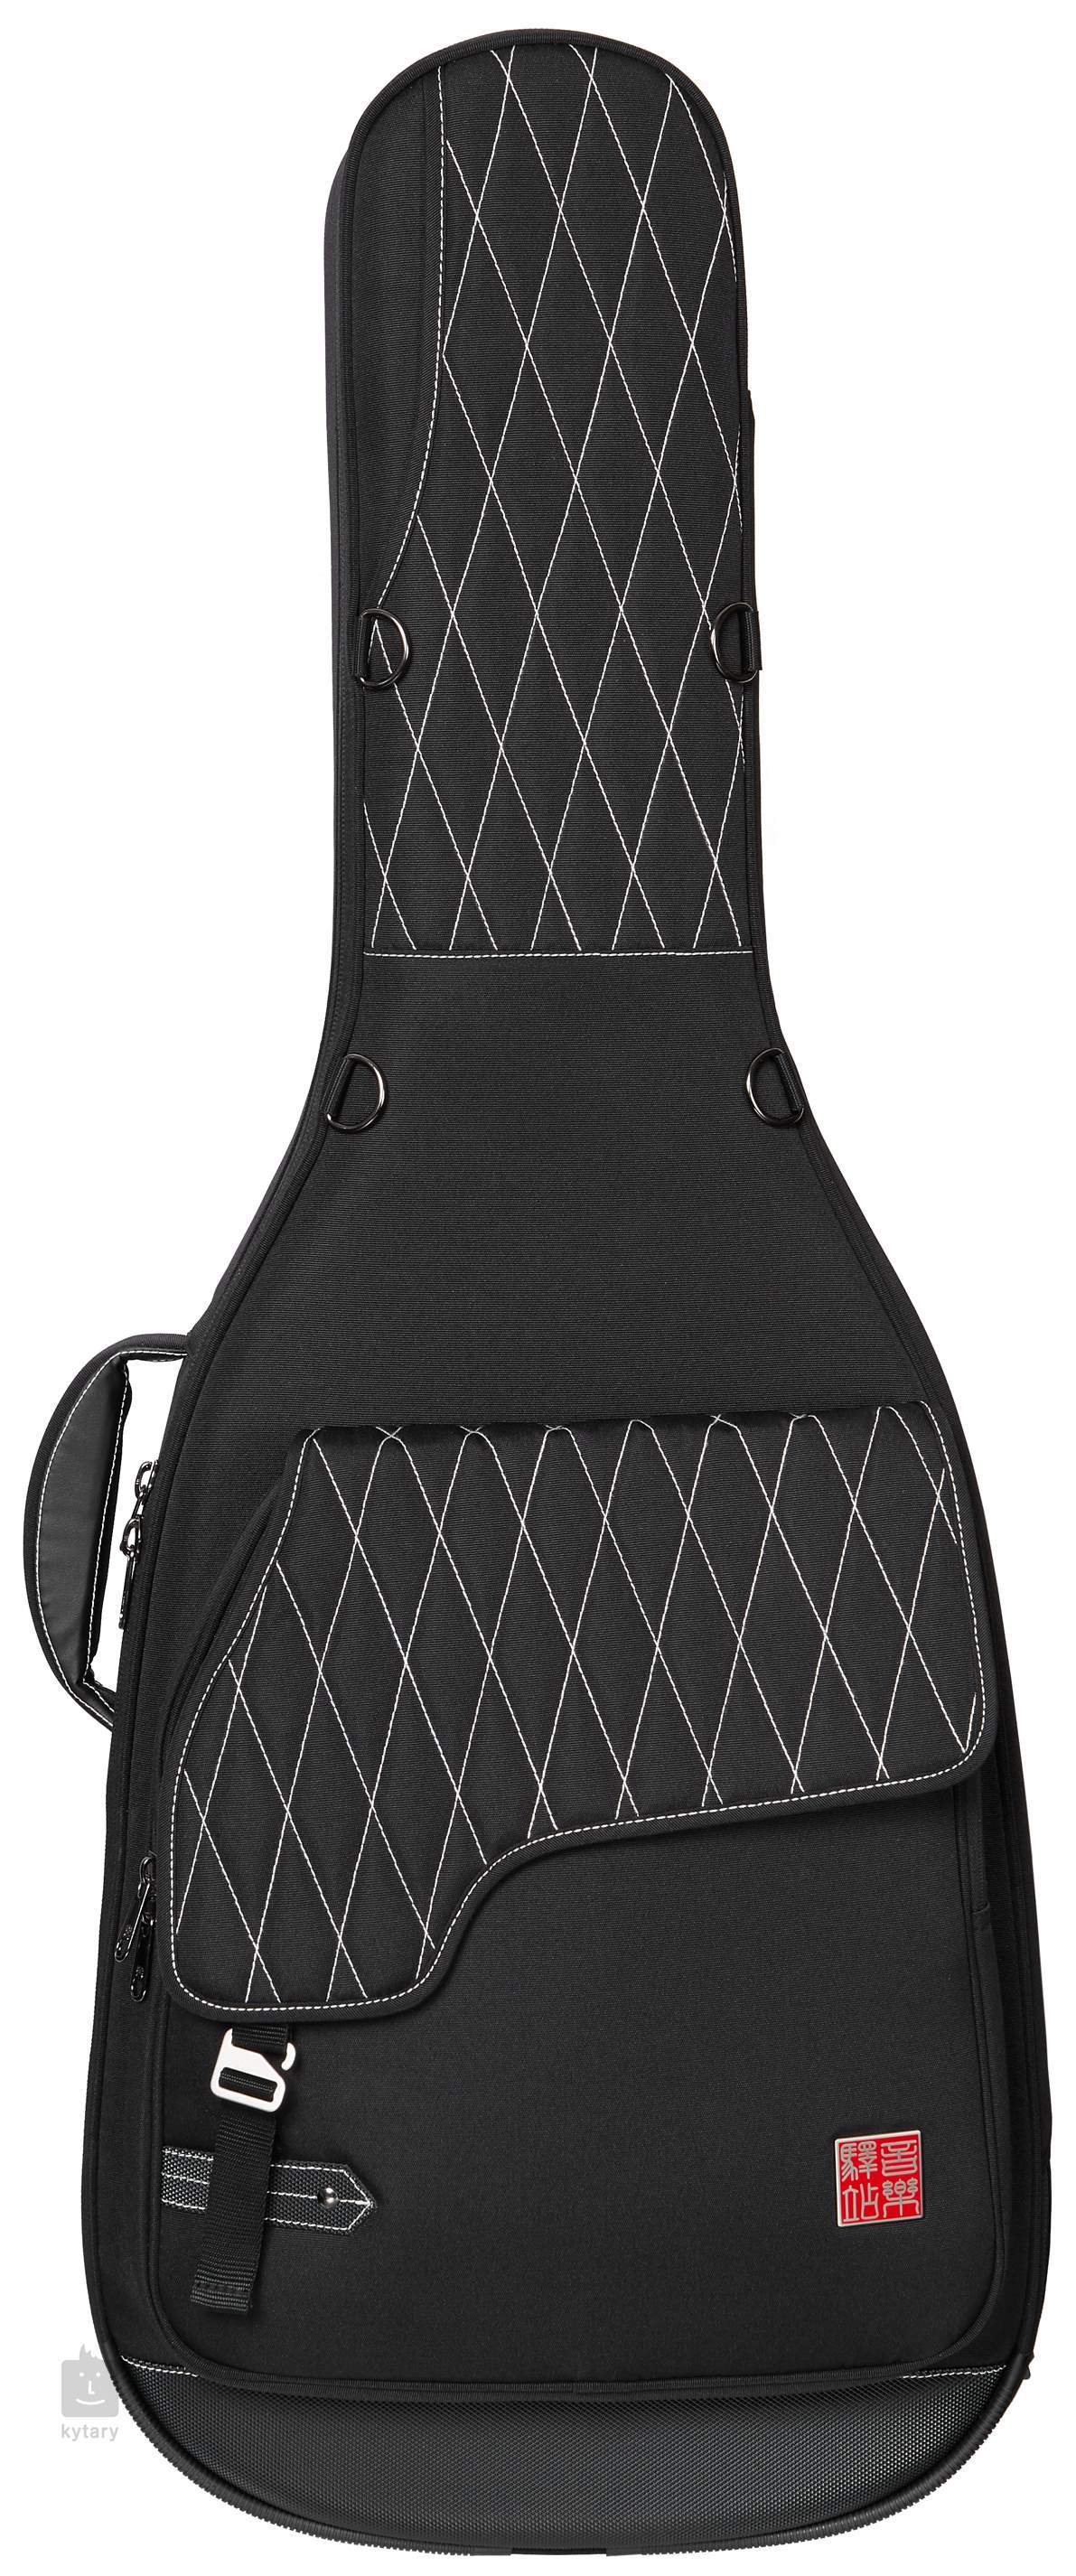 Oxford Padded gig bag - for acoustic guitar